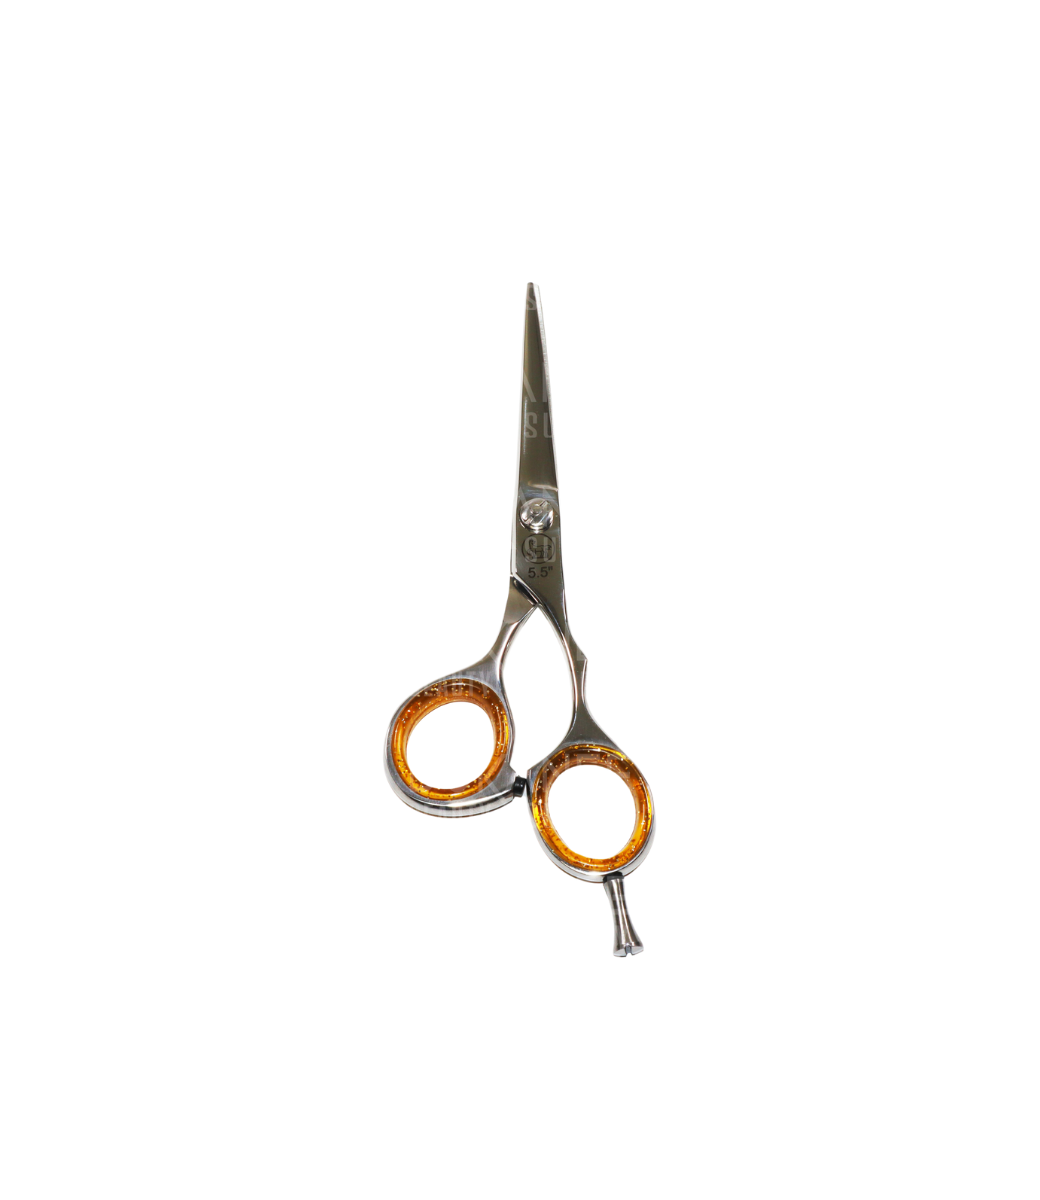 GERMANY SOLINGEN GERMANY SOLINGEN Styling Scissors Shears 5.5" W/Adjustable Screw & Renovable Finger Rest - 3190-05